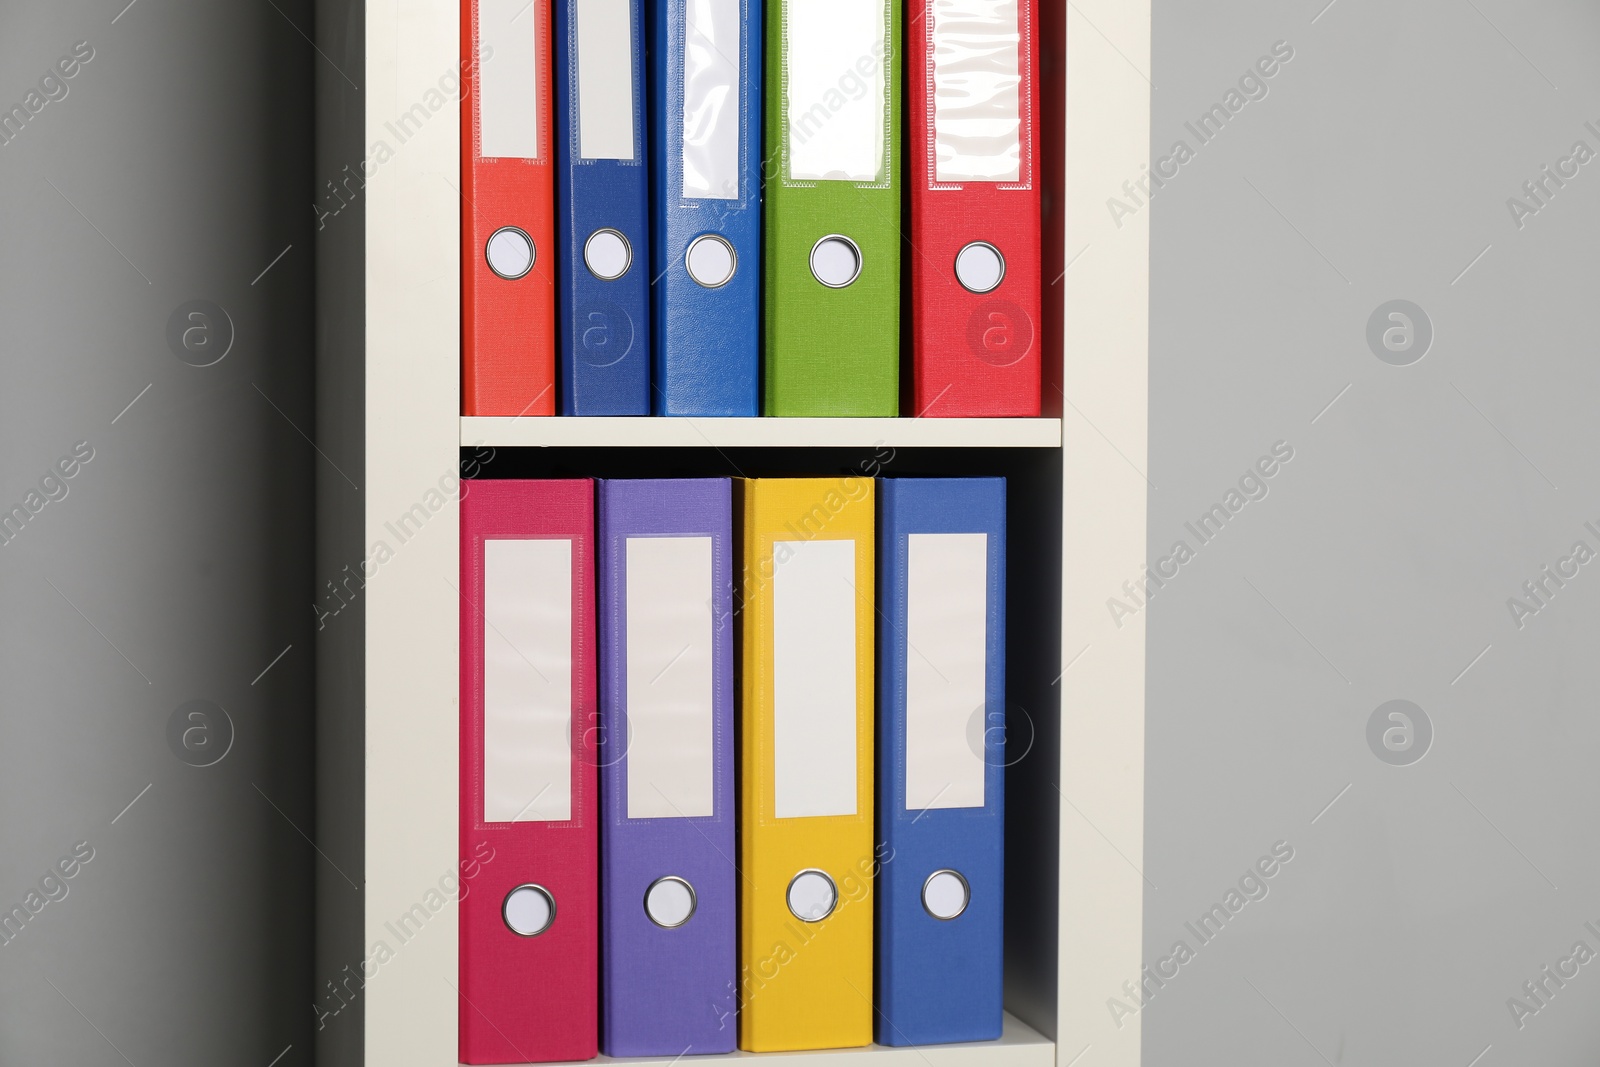 Photo of Colorful binder office folders on shelving unit near light grey wall